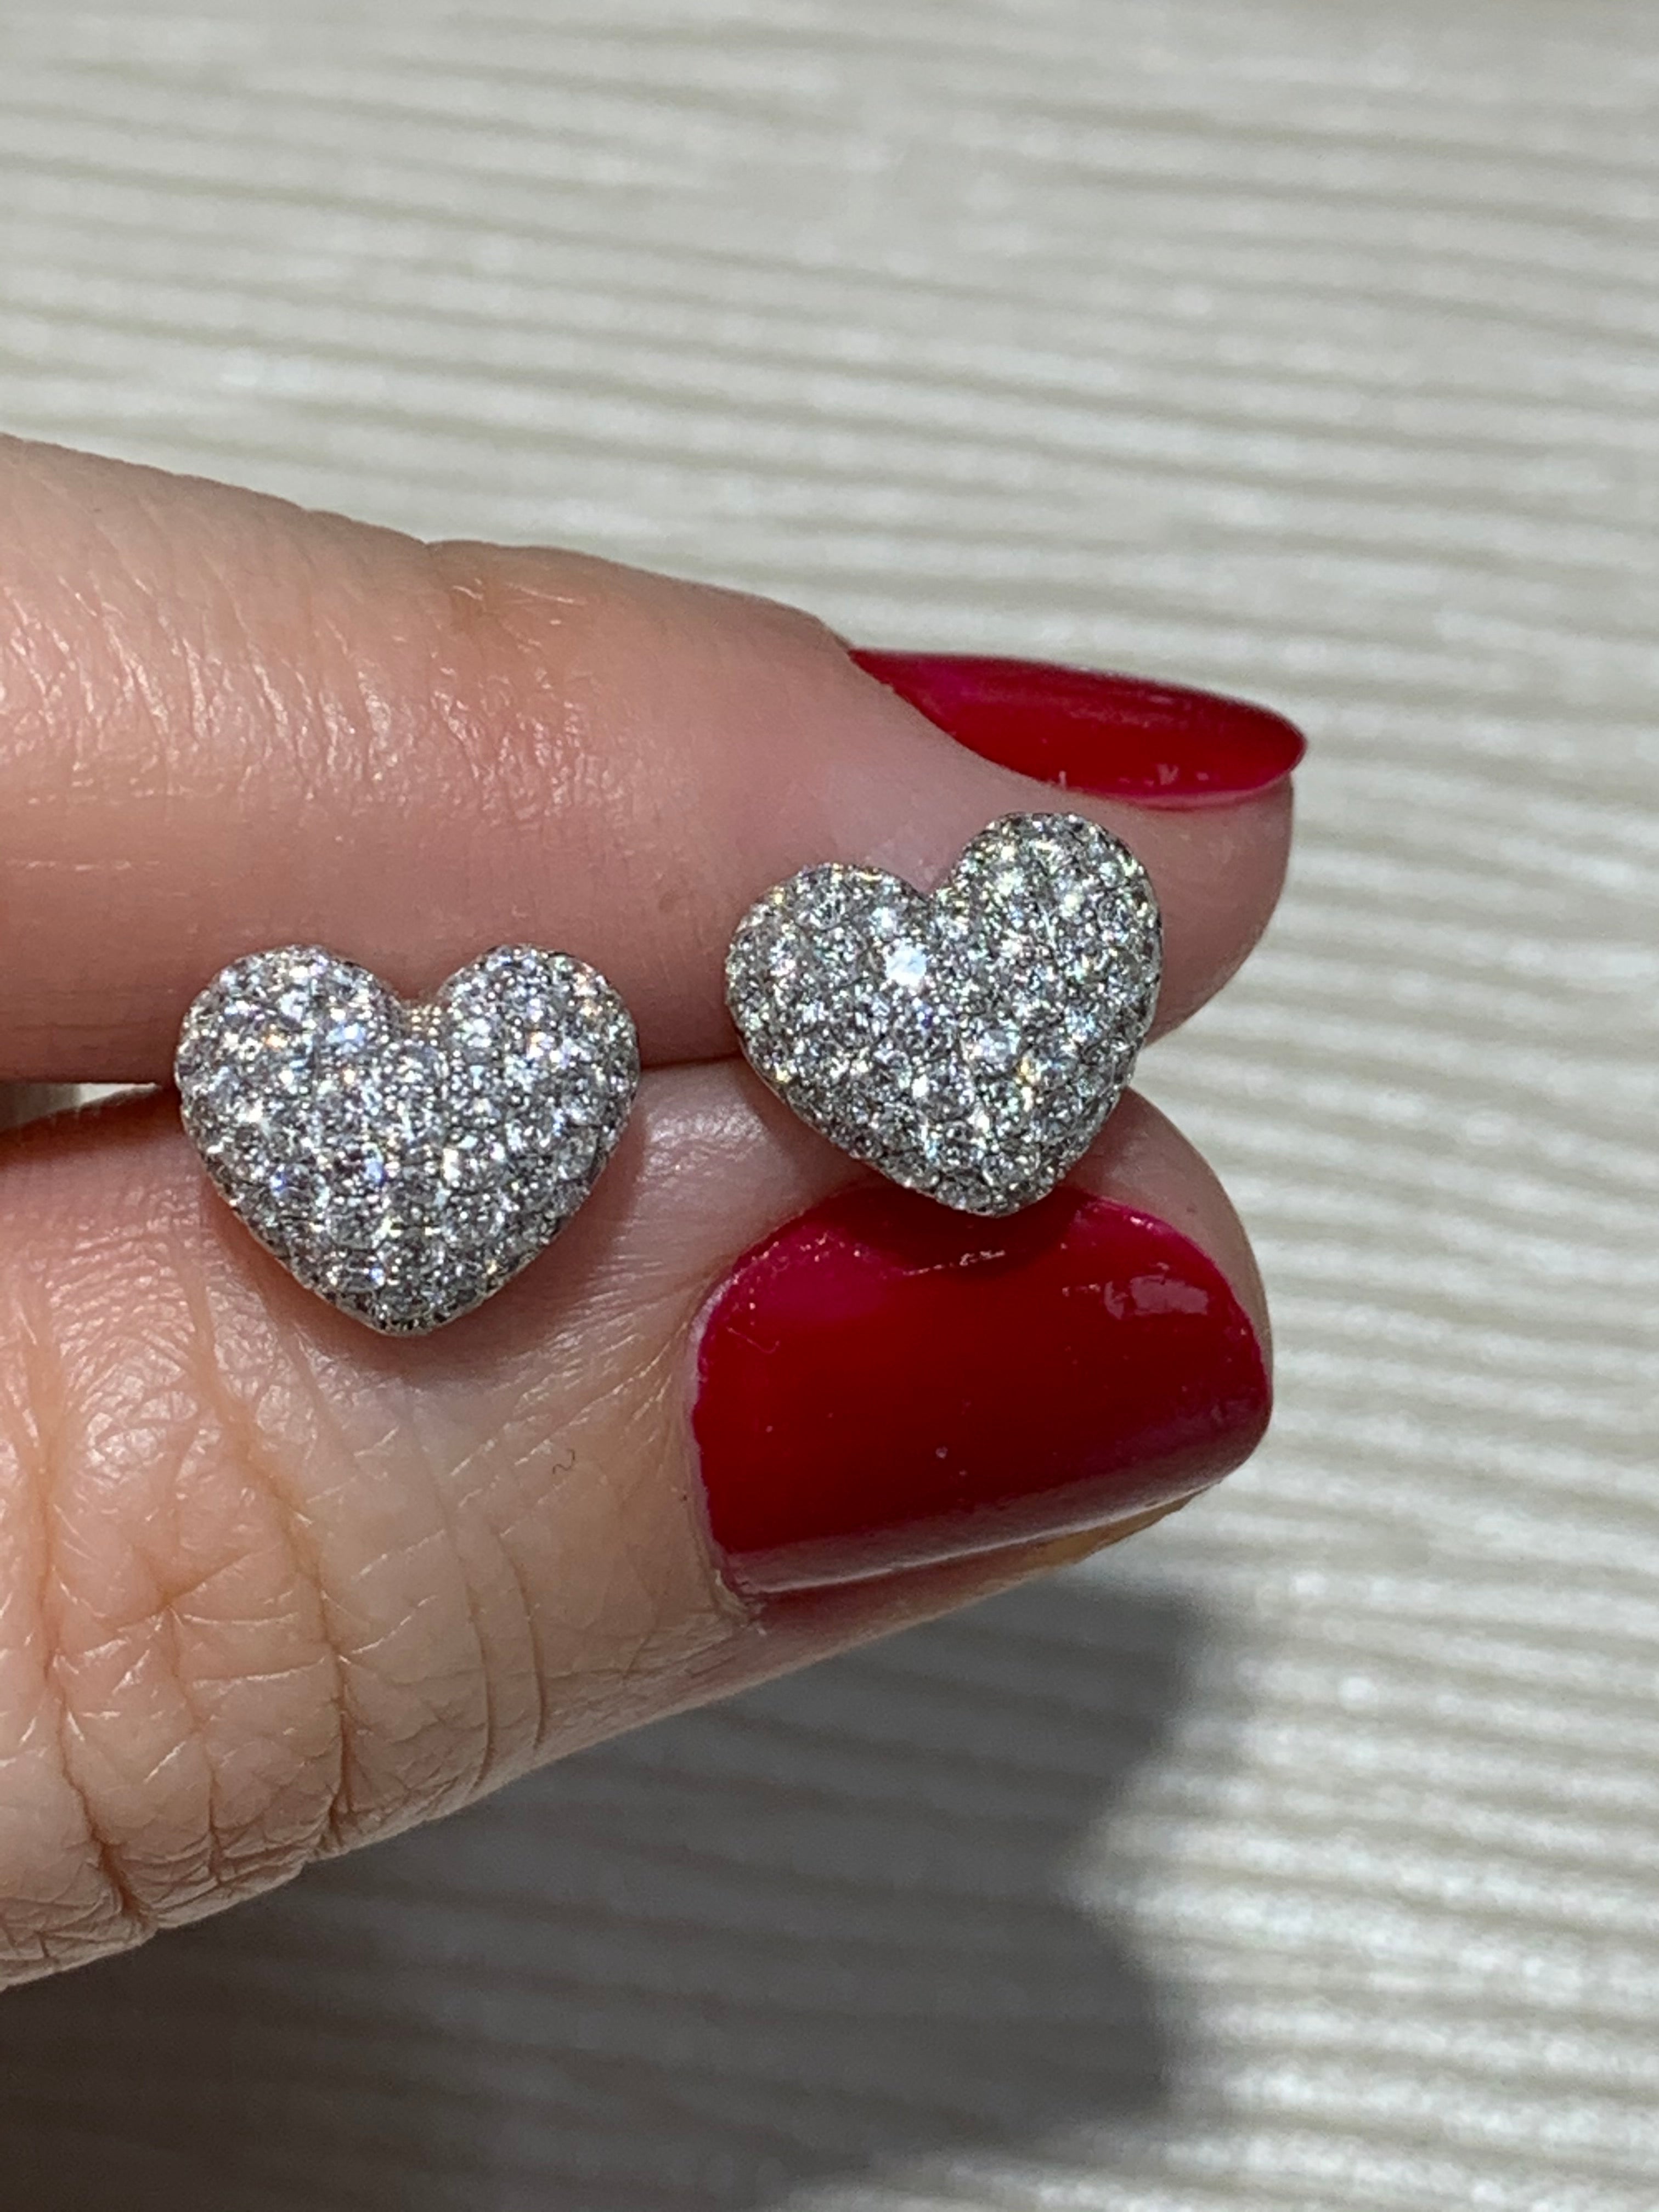 Heart Shaped Pave Diamond Earrings - HANIKEN JEWELERS NEW-YORK